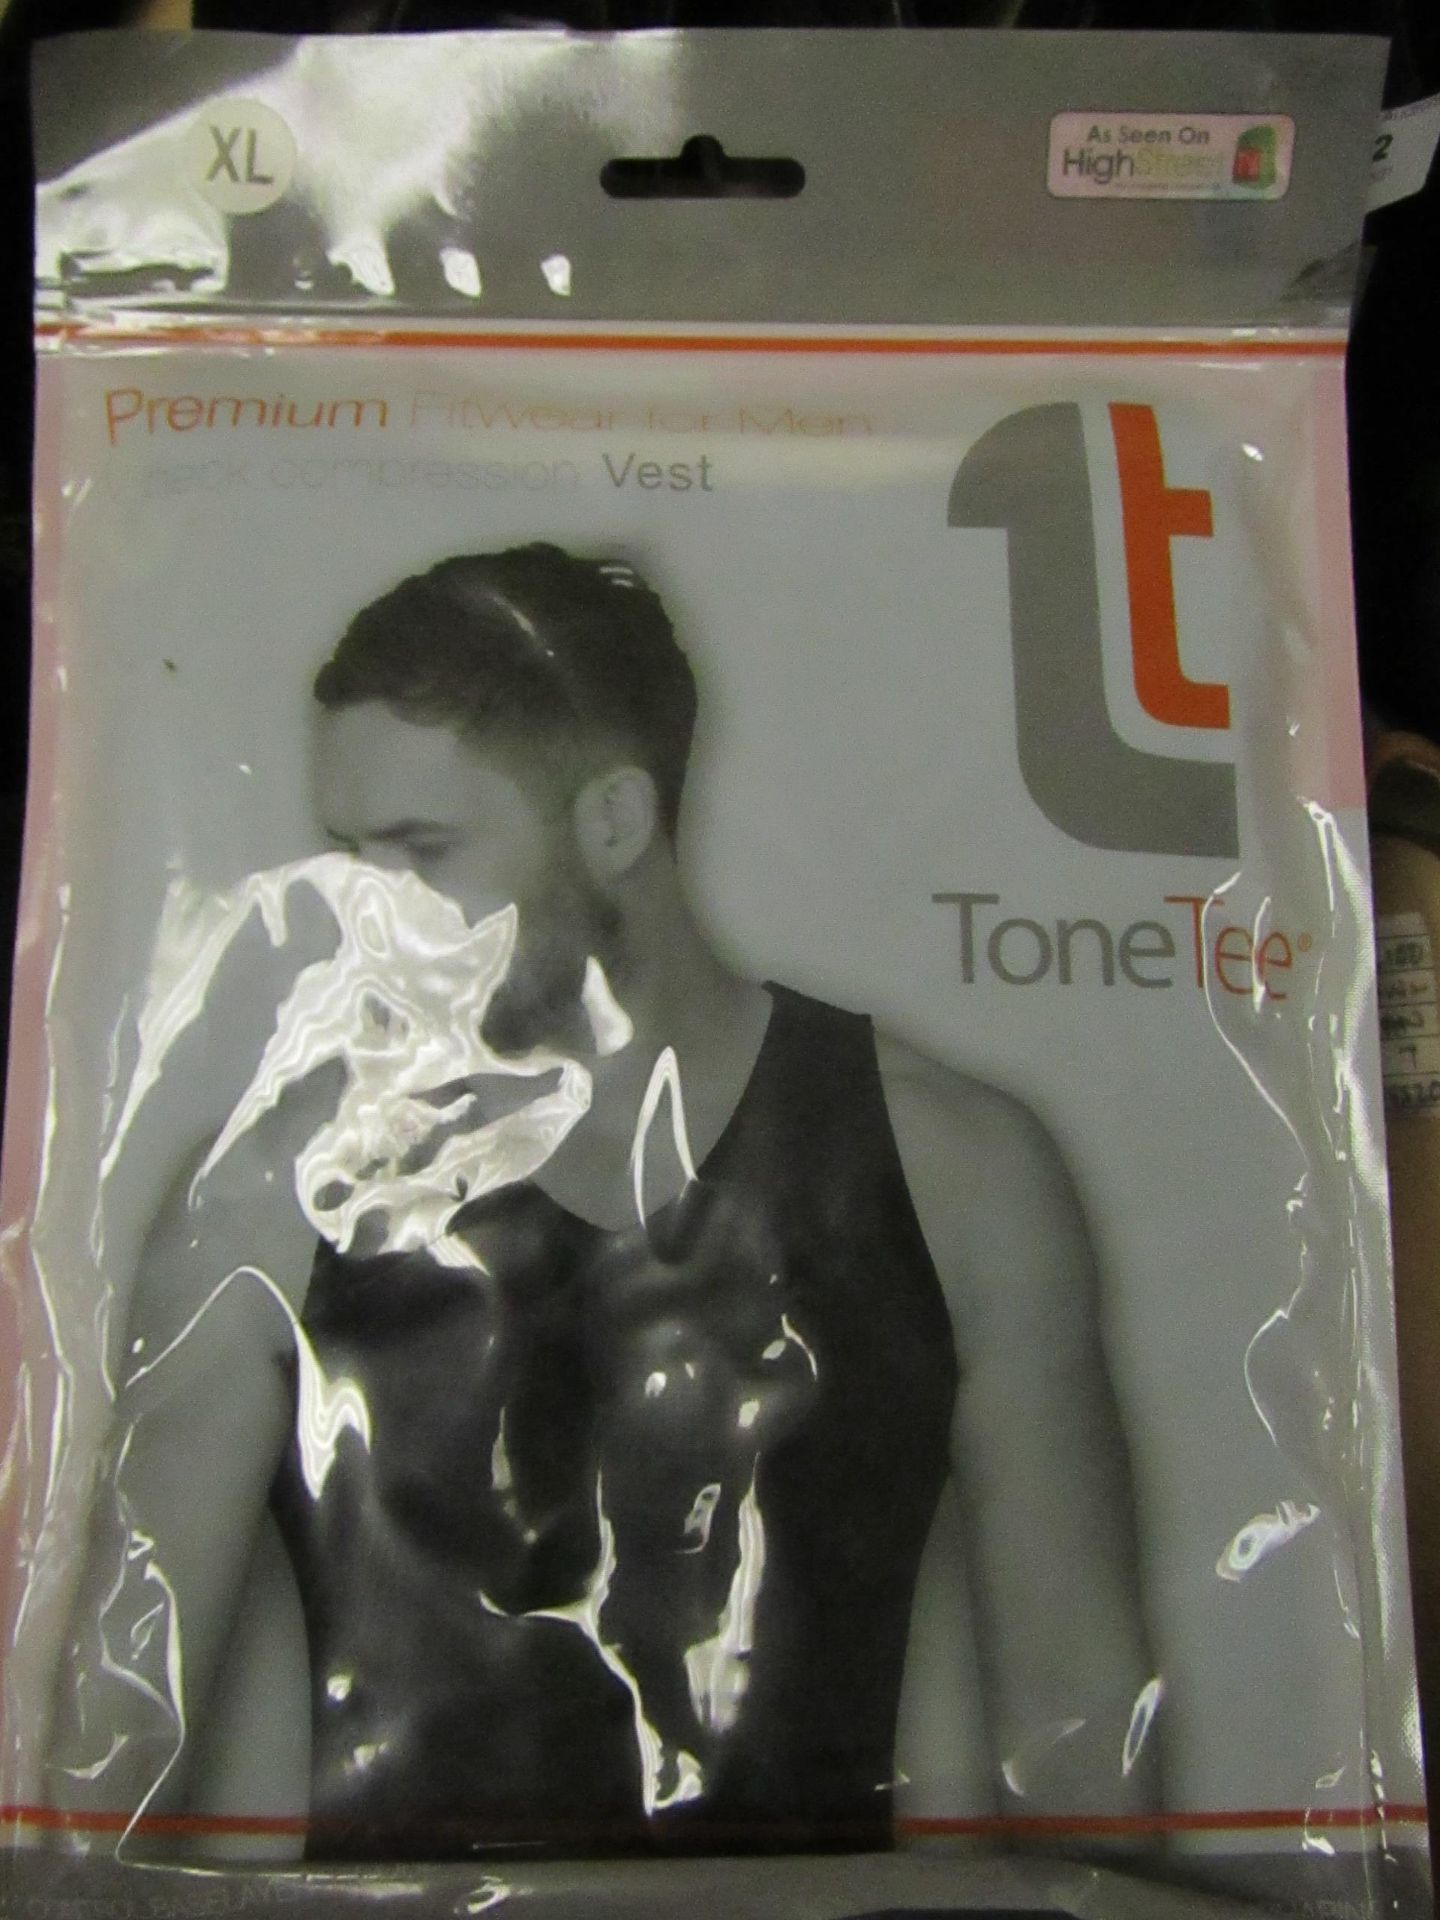 ToneTee Premium Fitwear For Men V Neck Compression Vest Black Size X/L New & Packaged